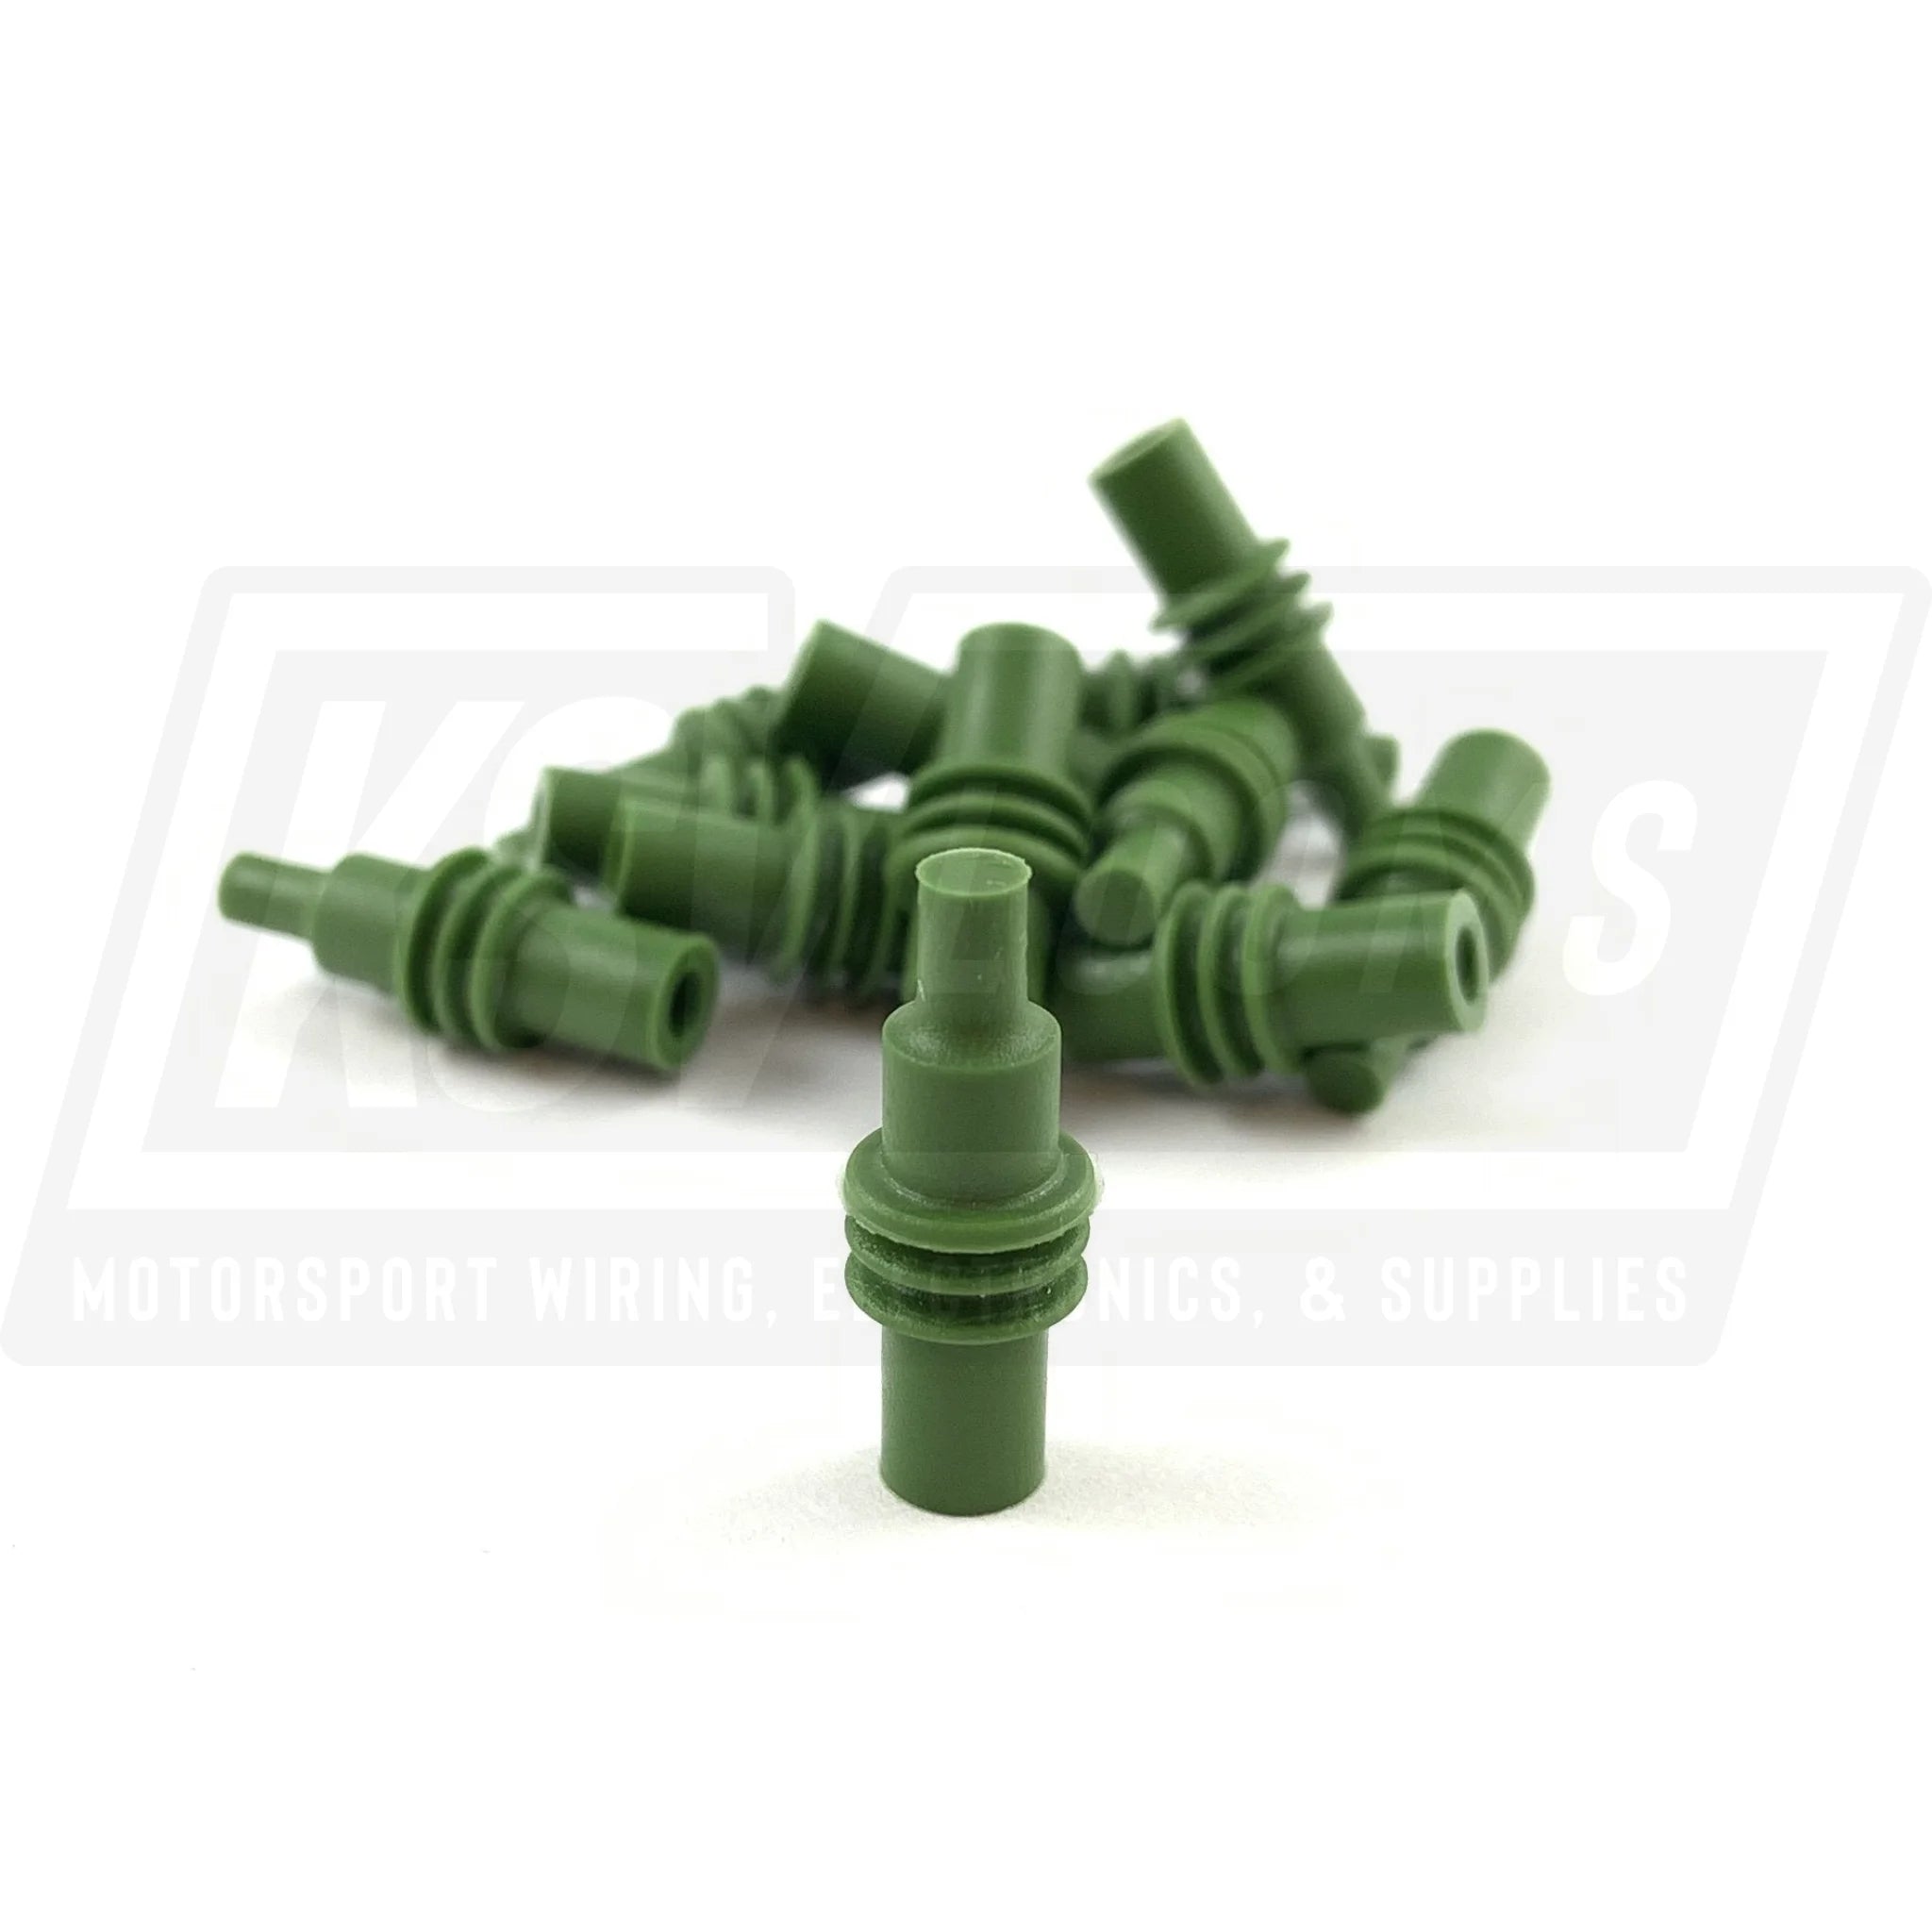 Cavity Plug Aptiv (Delphi) 12010300 Weather-Pack Metri-Pack 280 Series Green